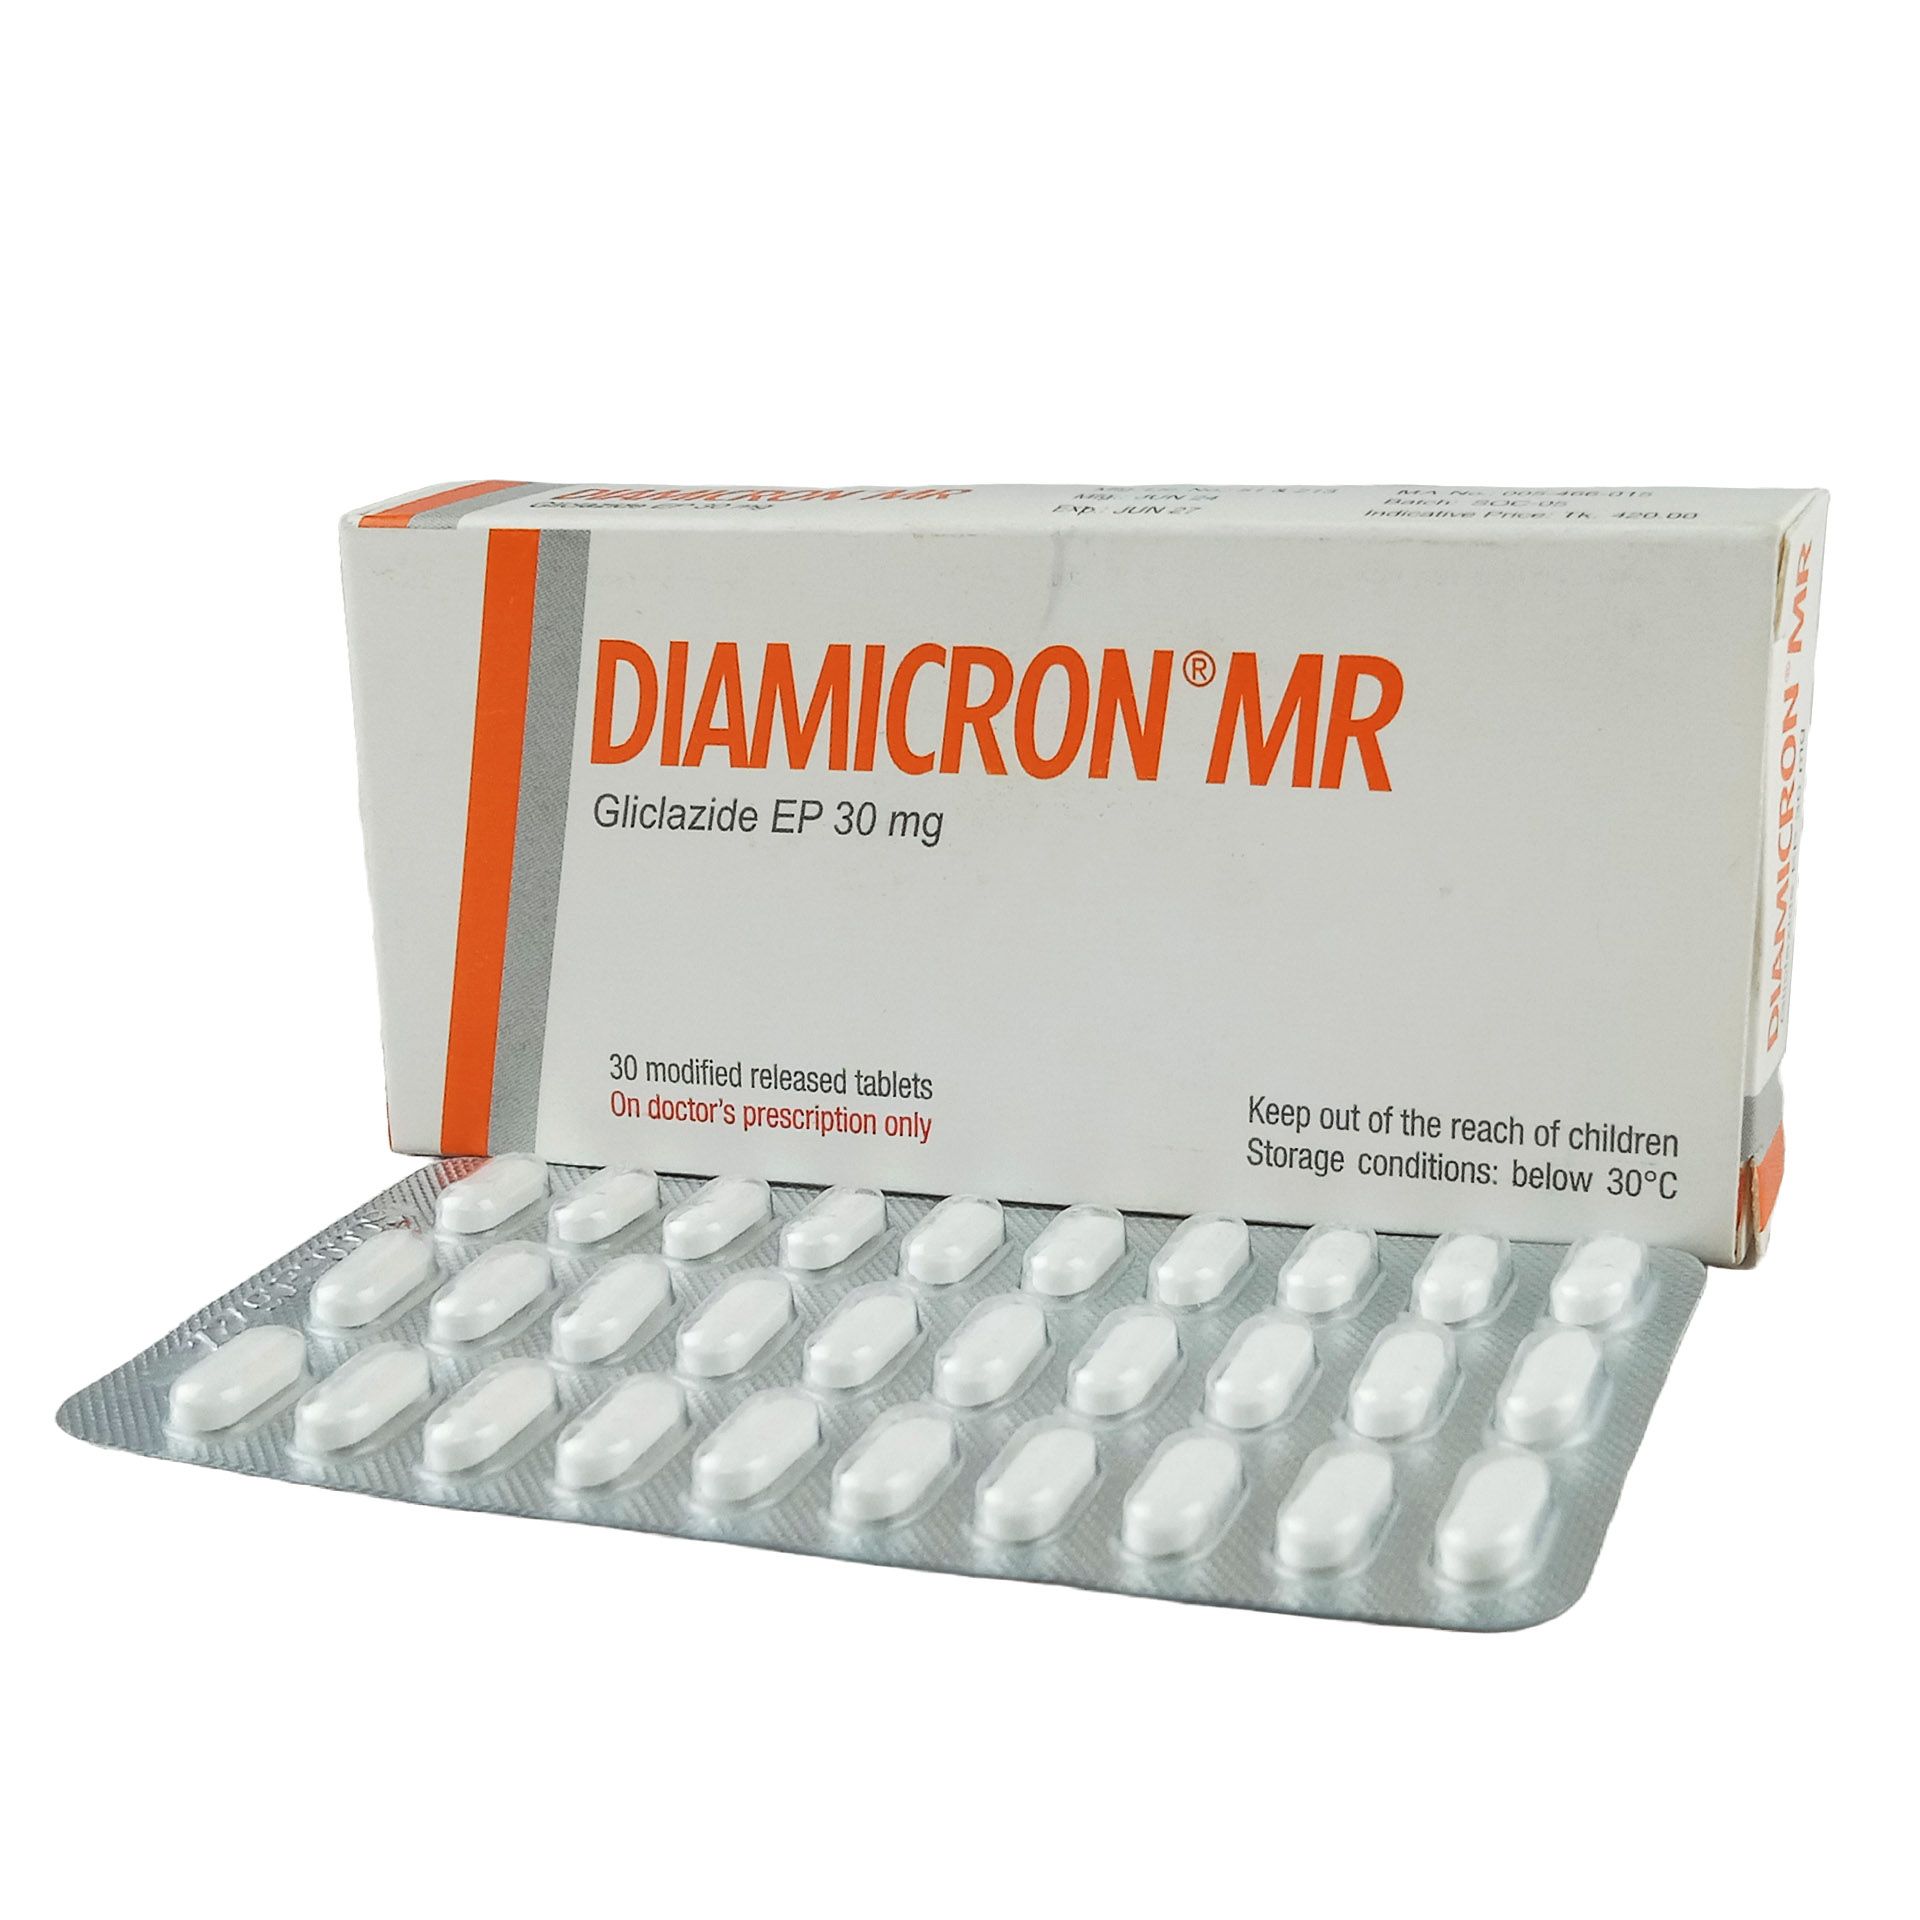 Diamicron MR 30mg tablet